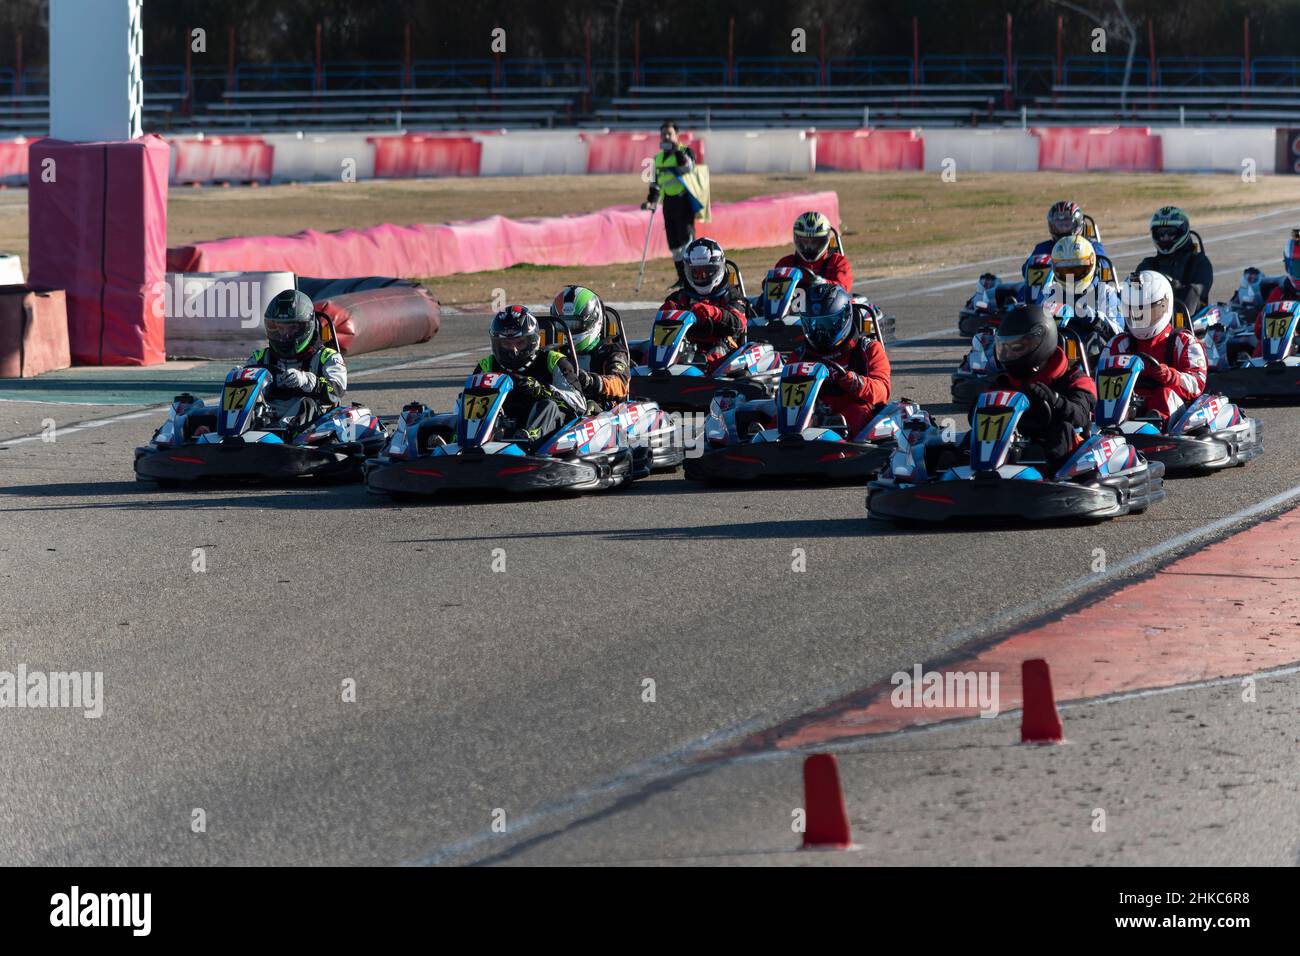 Boys racing Go-cart on karting circuit, Toledo, Spain Stock Photo